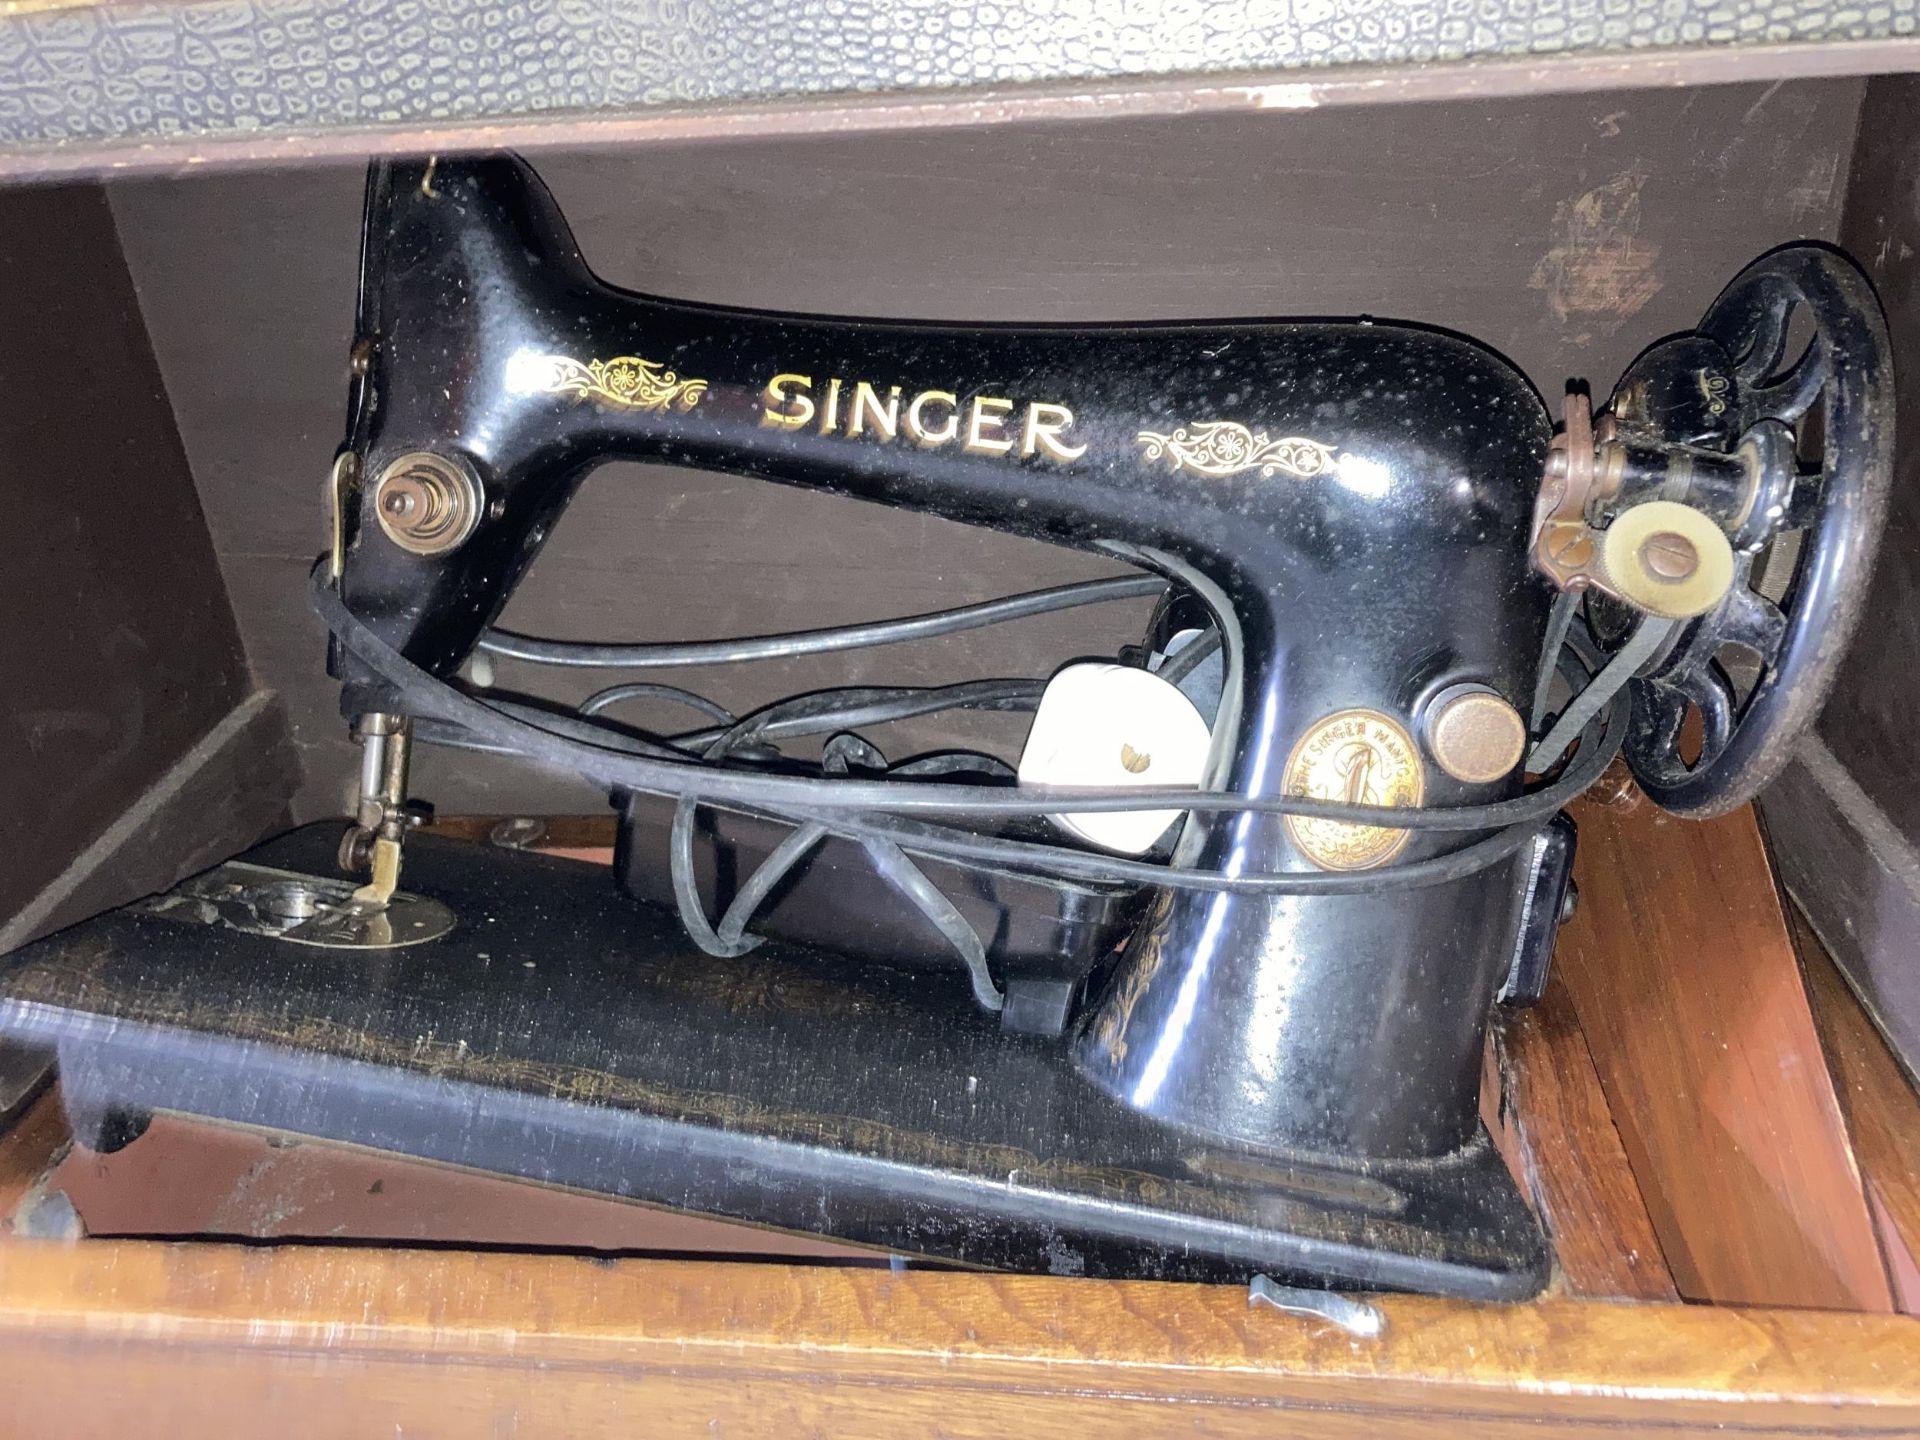 A VINTAGE SINGER SEWING MACHINE, MODEL NO. 75070341, IN ORIGINAL BOX - Image 3 of 3